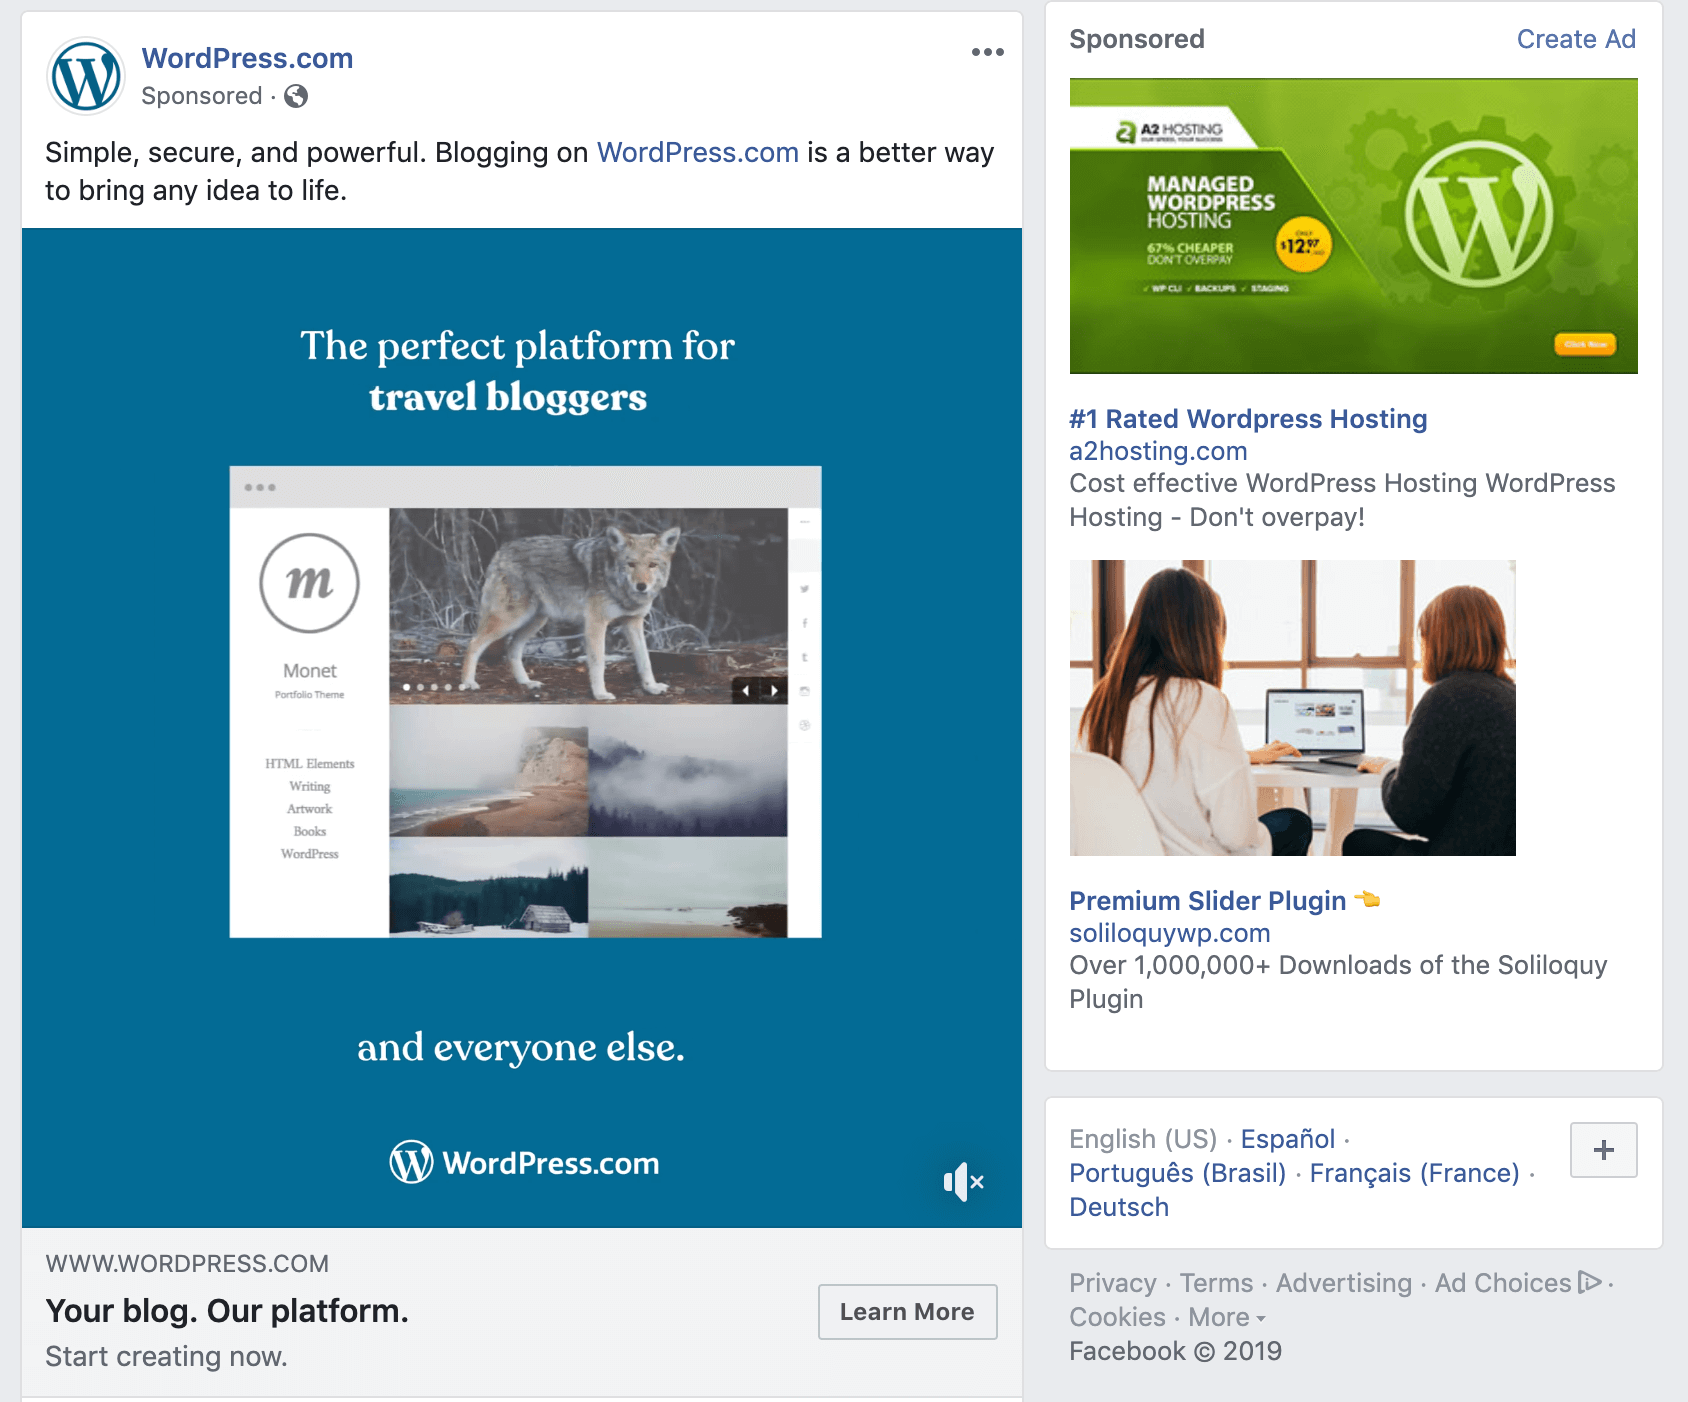 Targeted ads on Facebook.